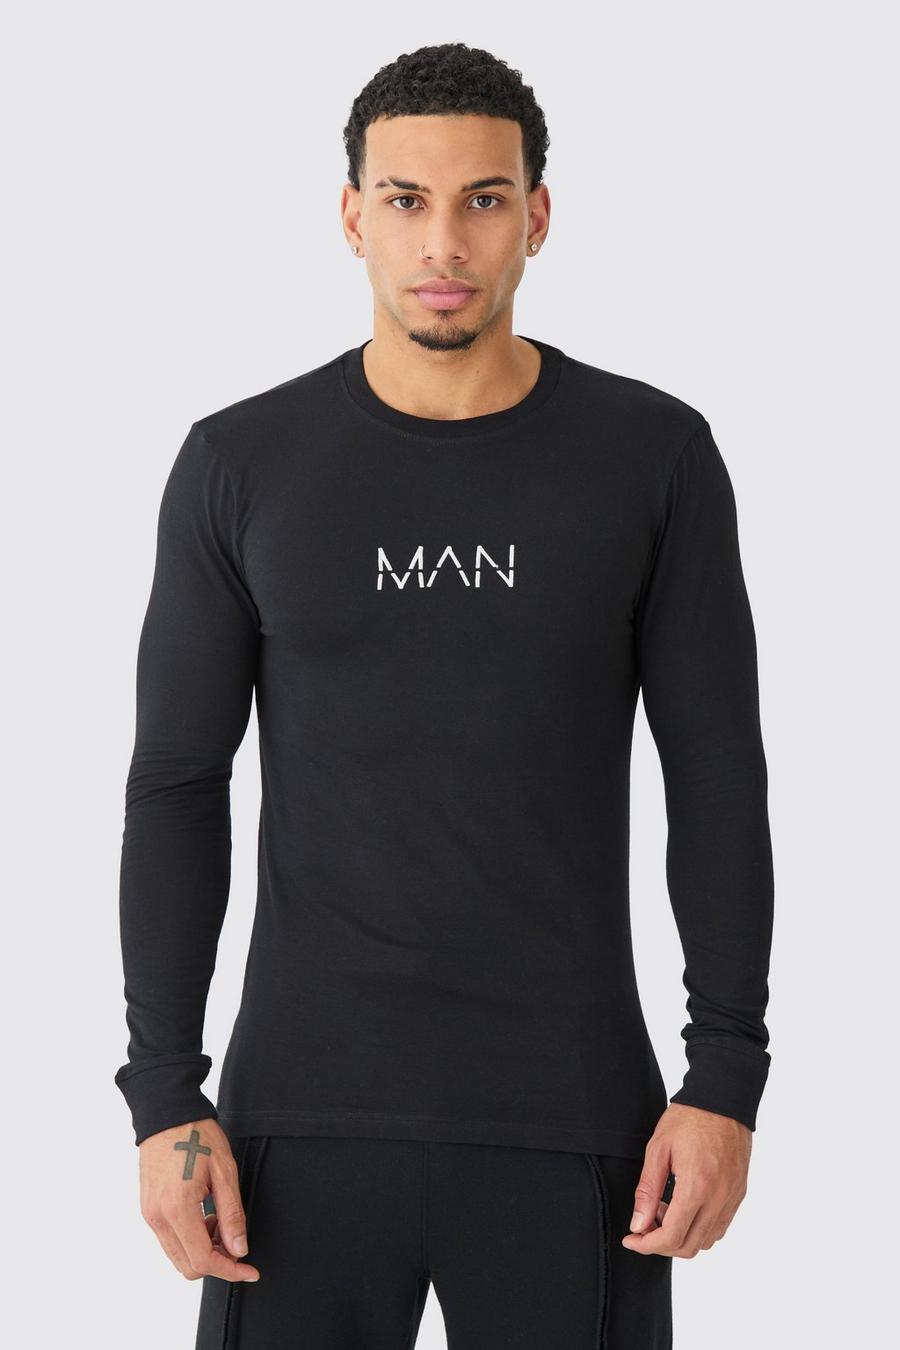 Camiseta MAN de manga larga ajustada al músculo, Black image number 1